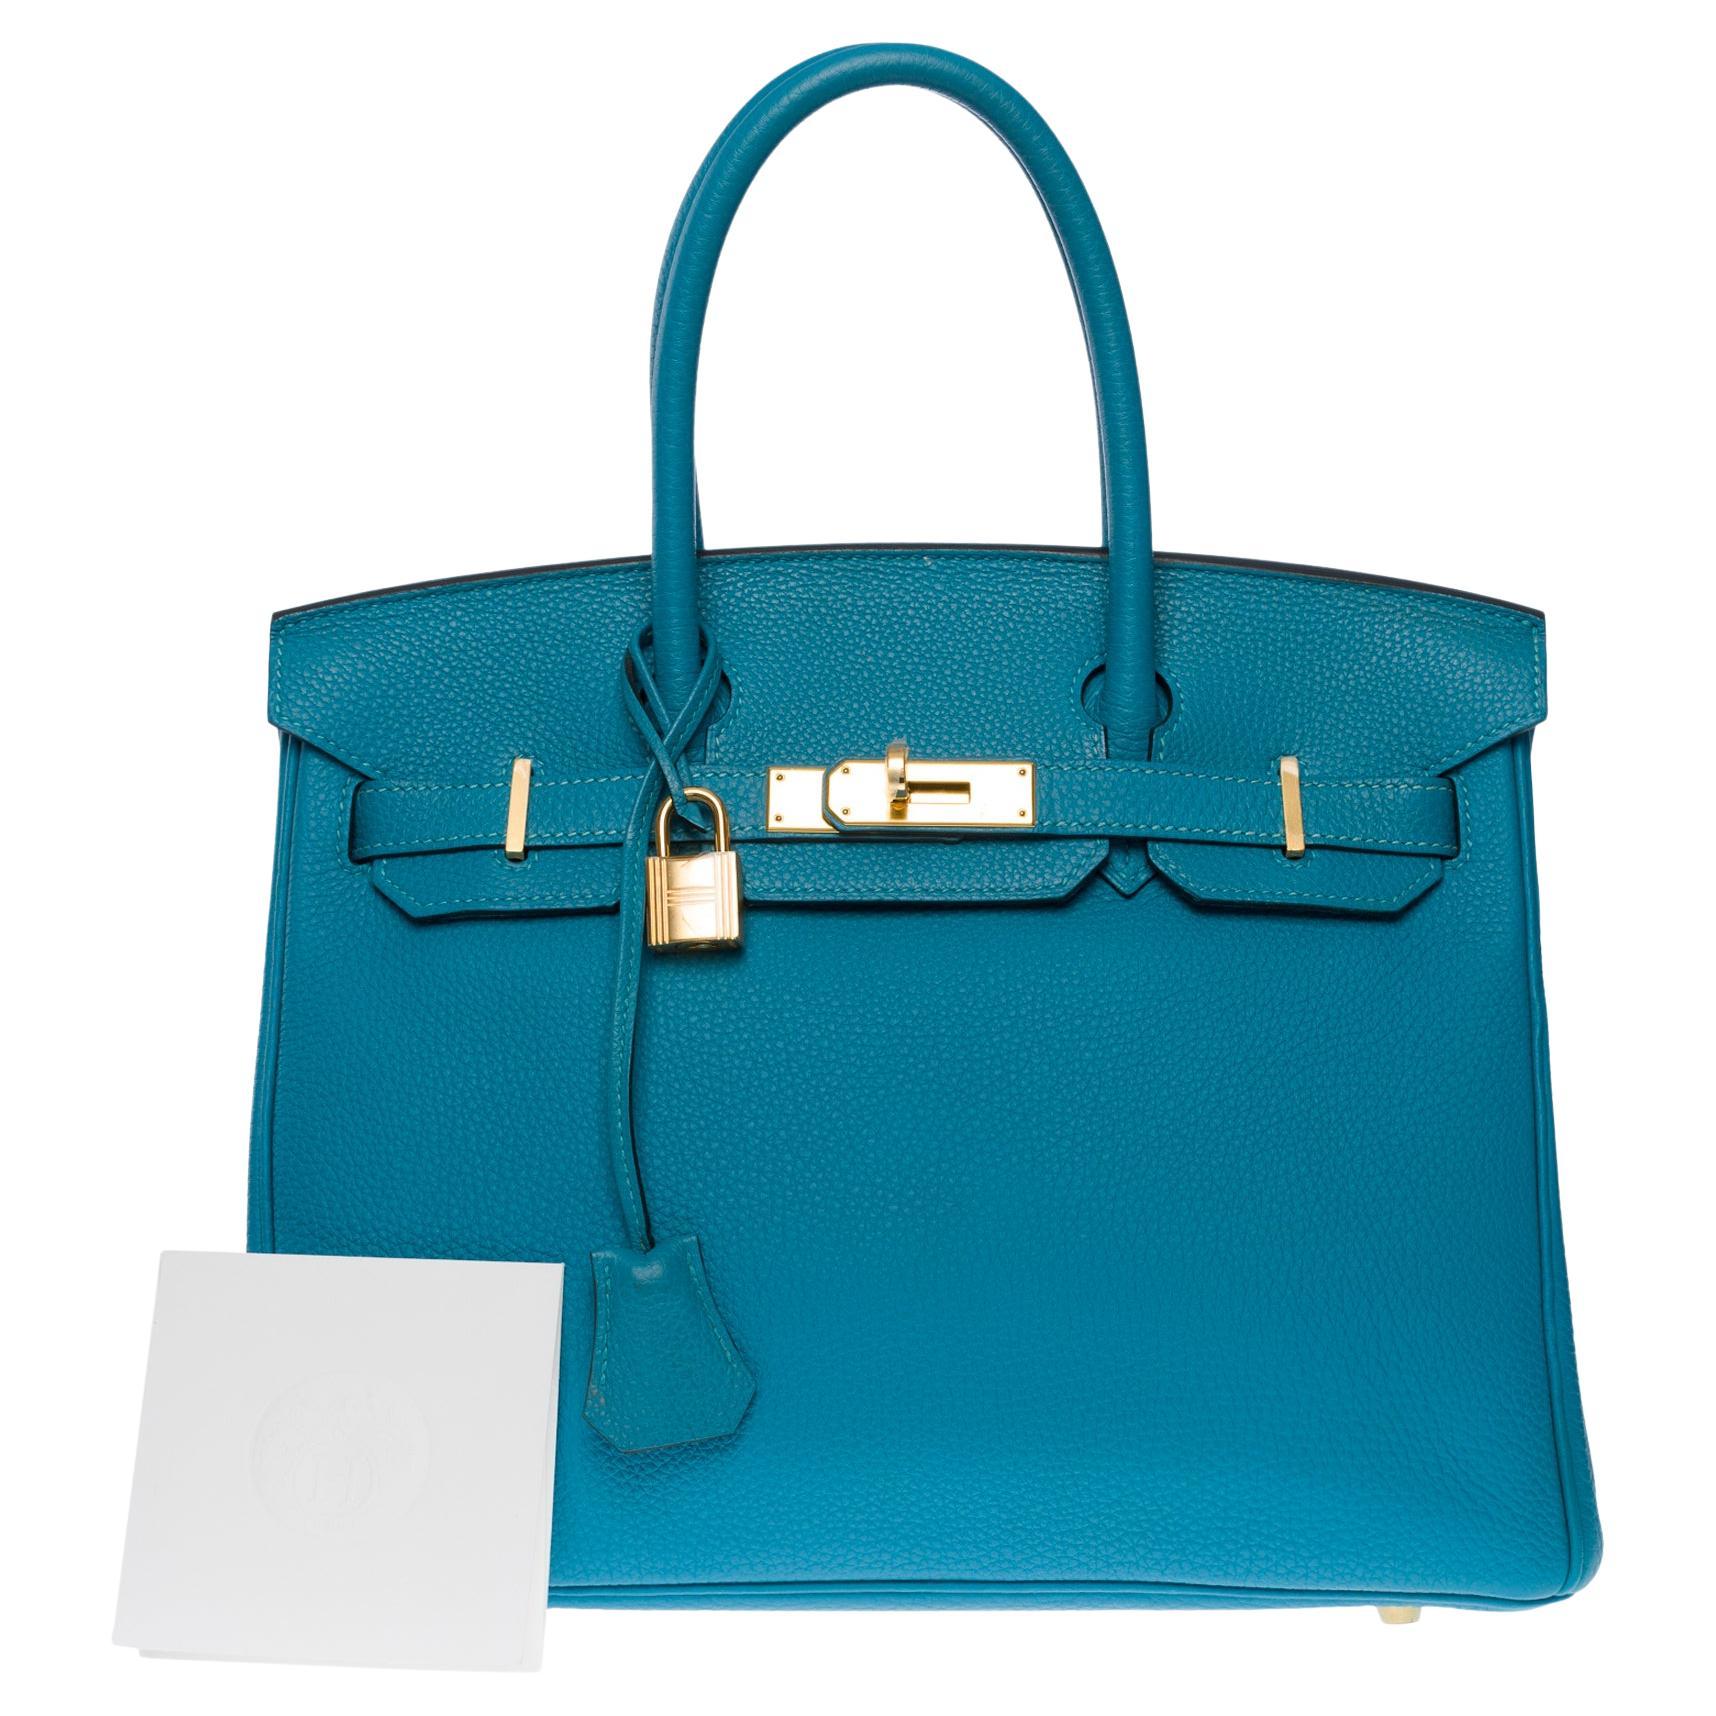 Amazing New Hermès Birkin 30 handbag in Turquoise Togo leather, GHW For Sale